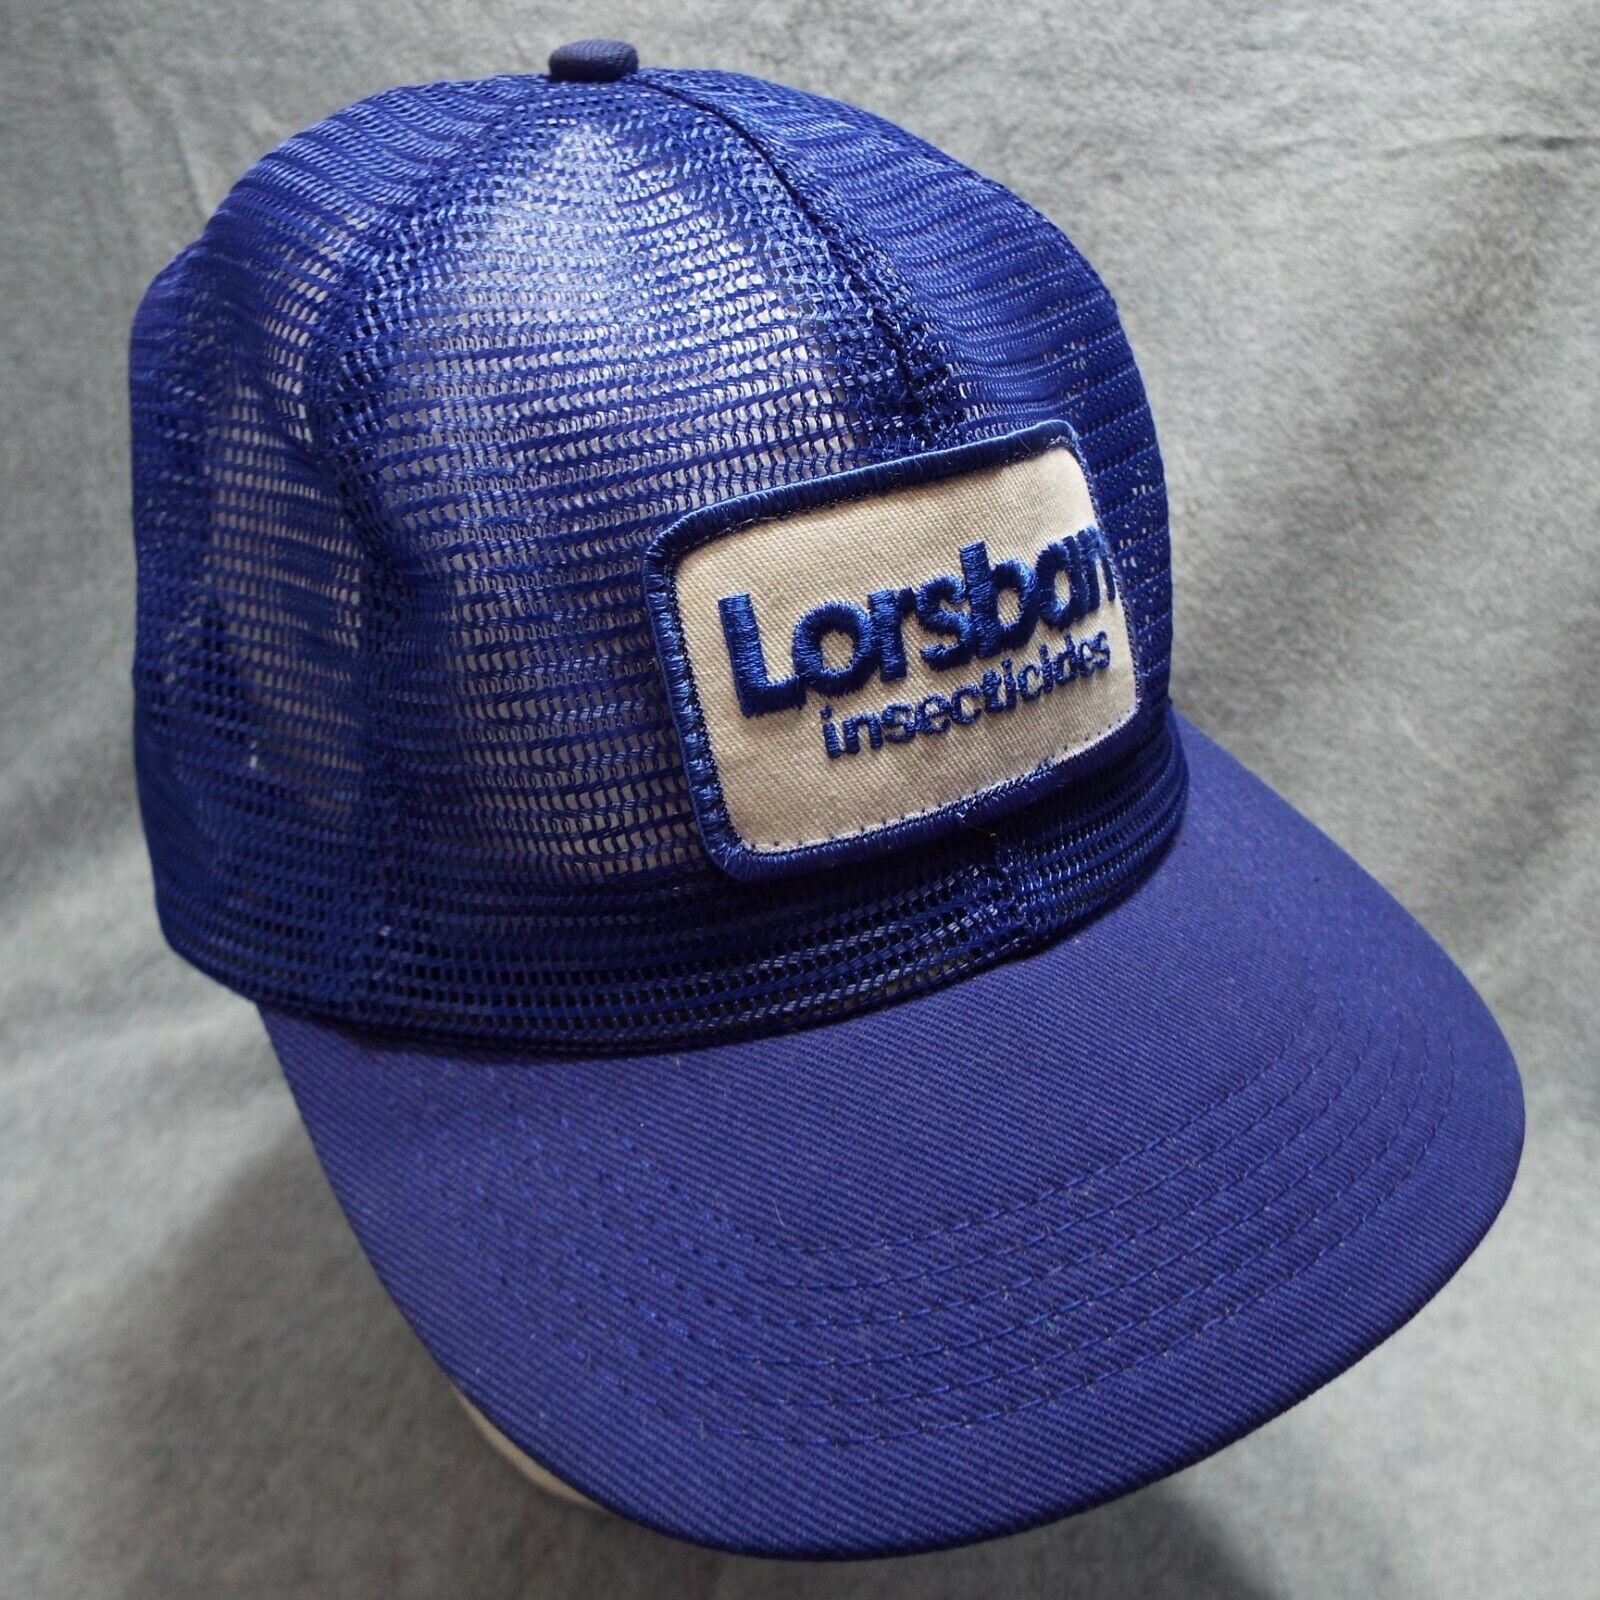 Lorsban Insecticides Vintage Hat Mesh Cap Patch Snapback Made ...